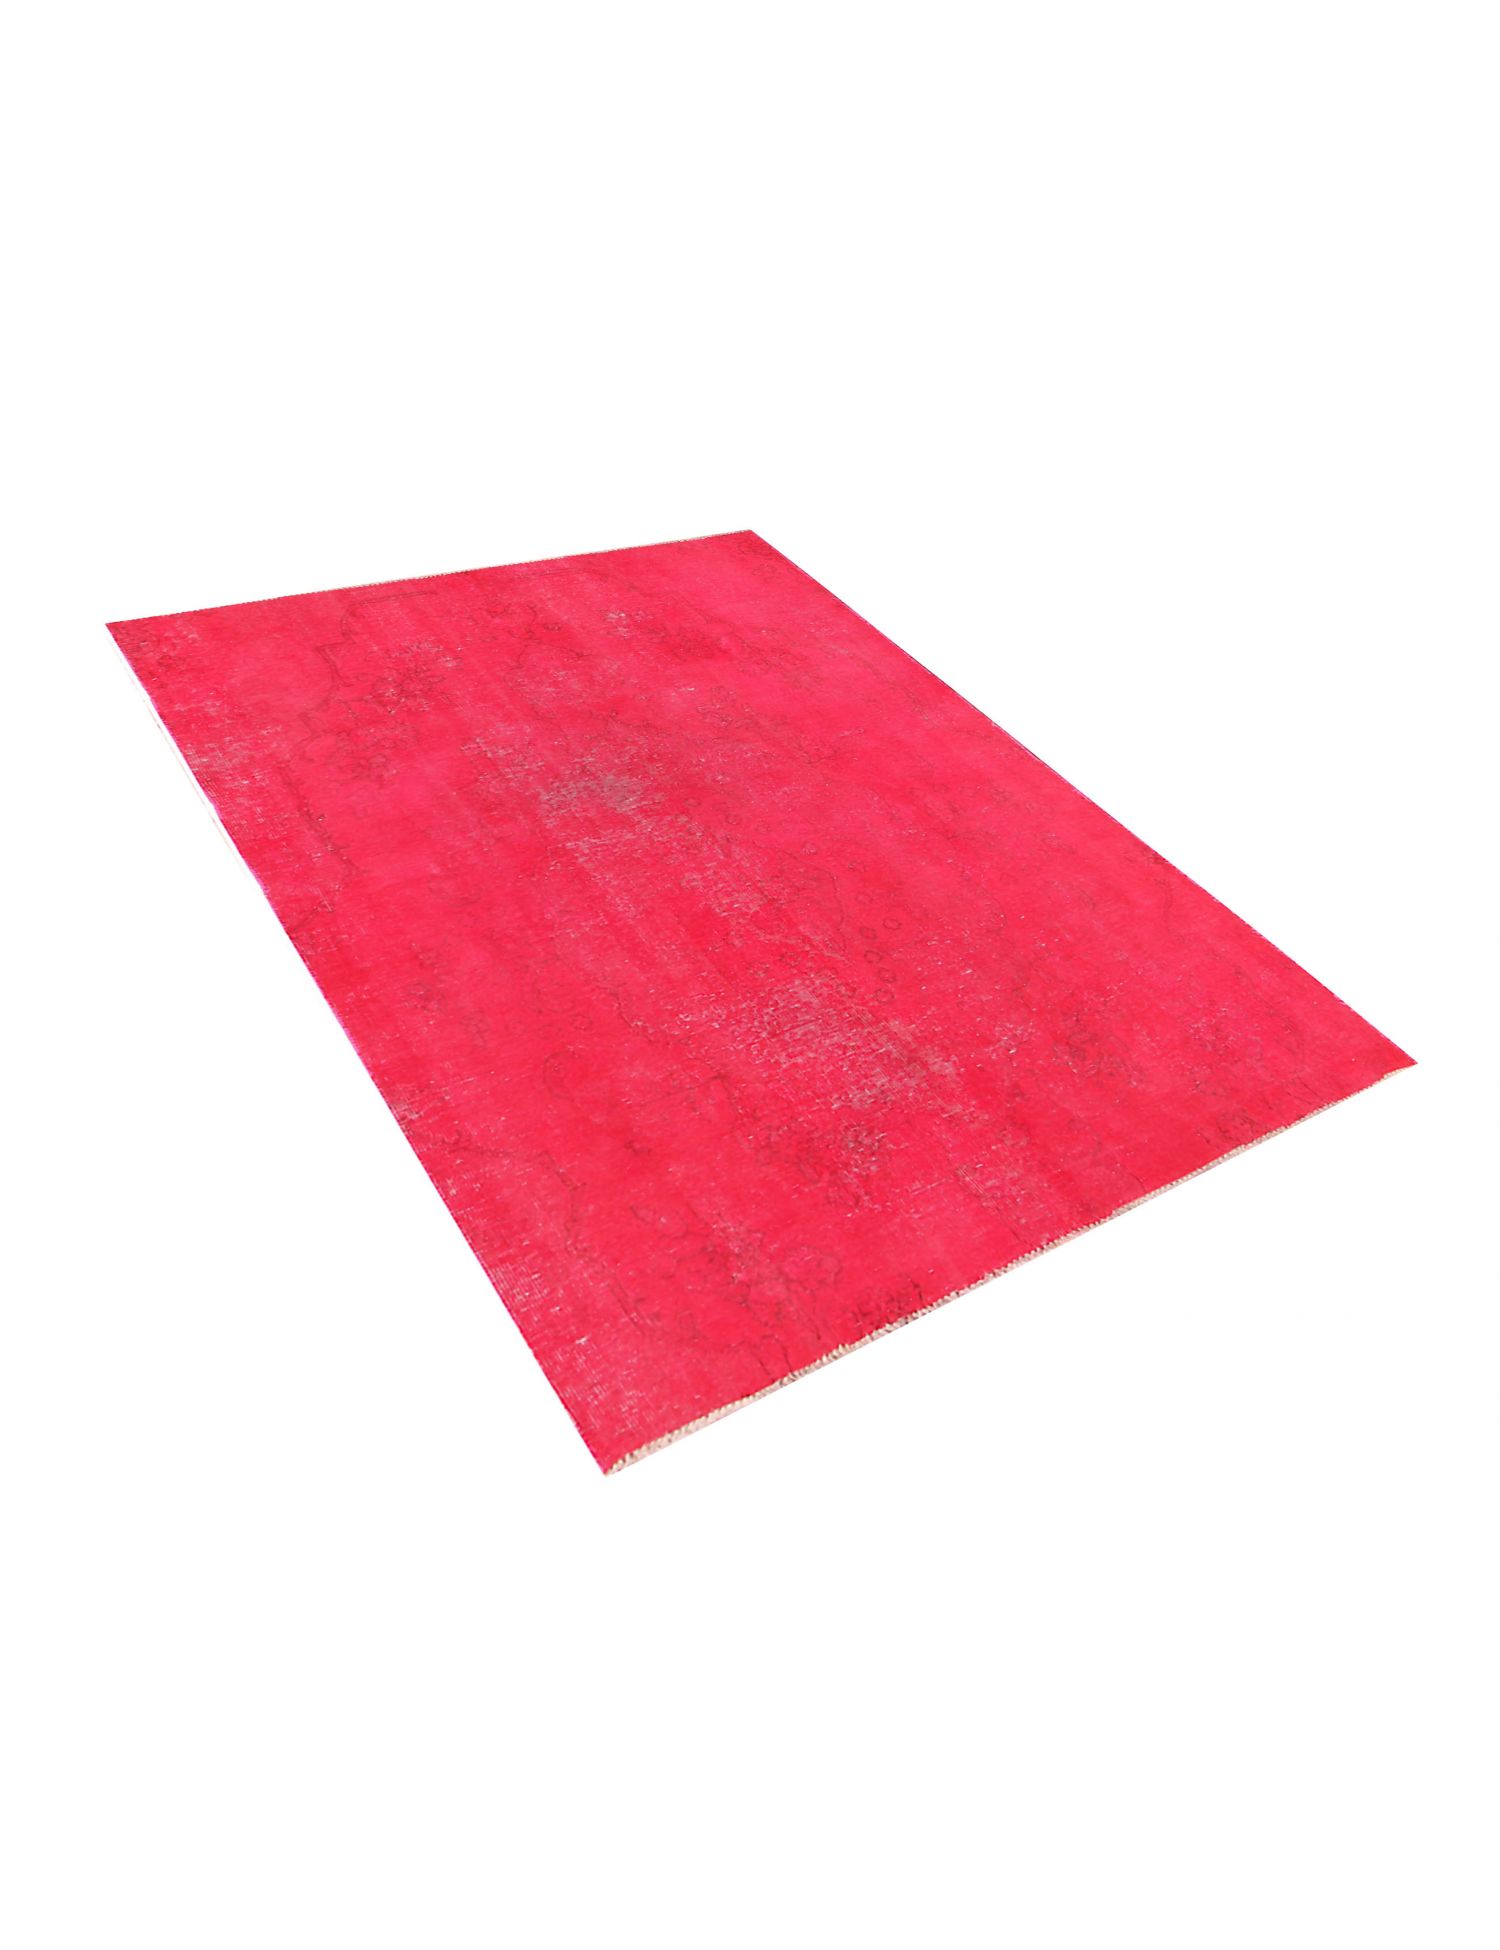 Persialaiset vintage matot  punainen <br/>212 x 162 cm